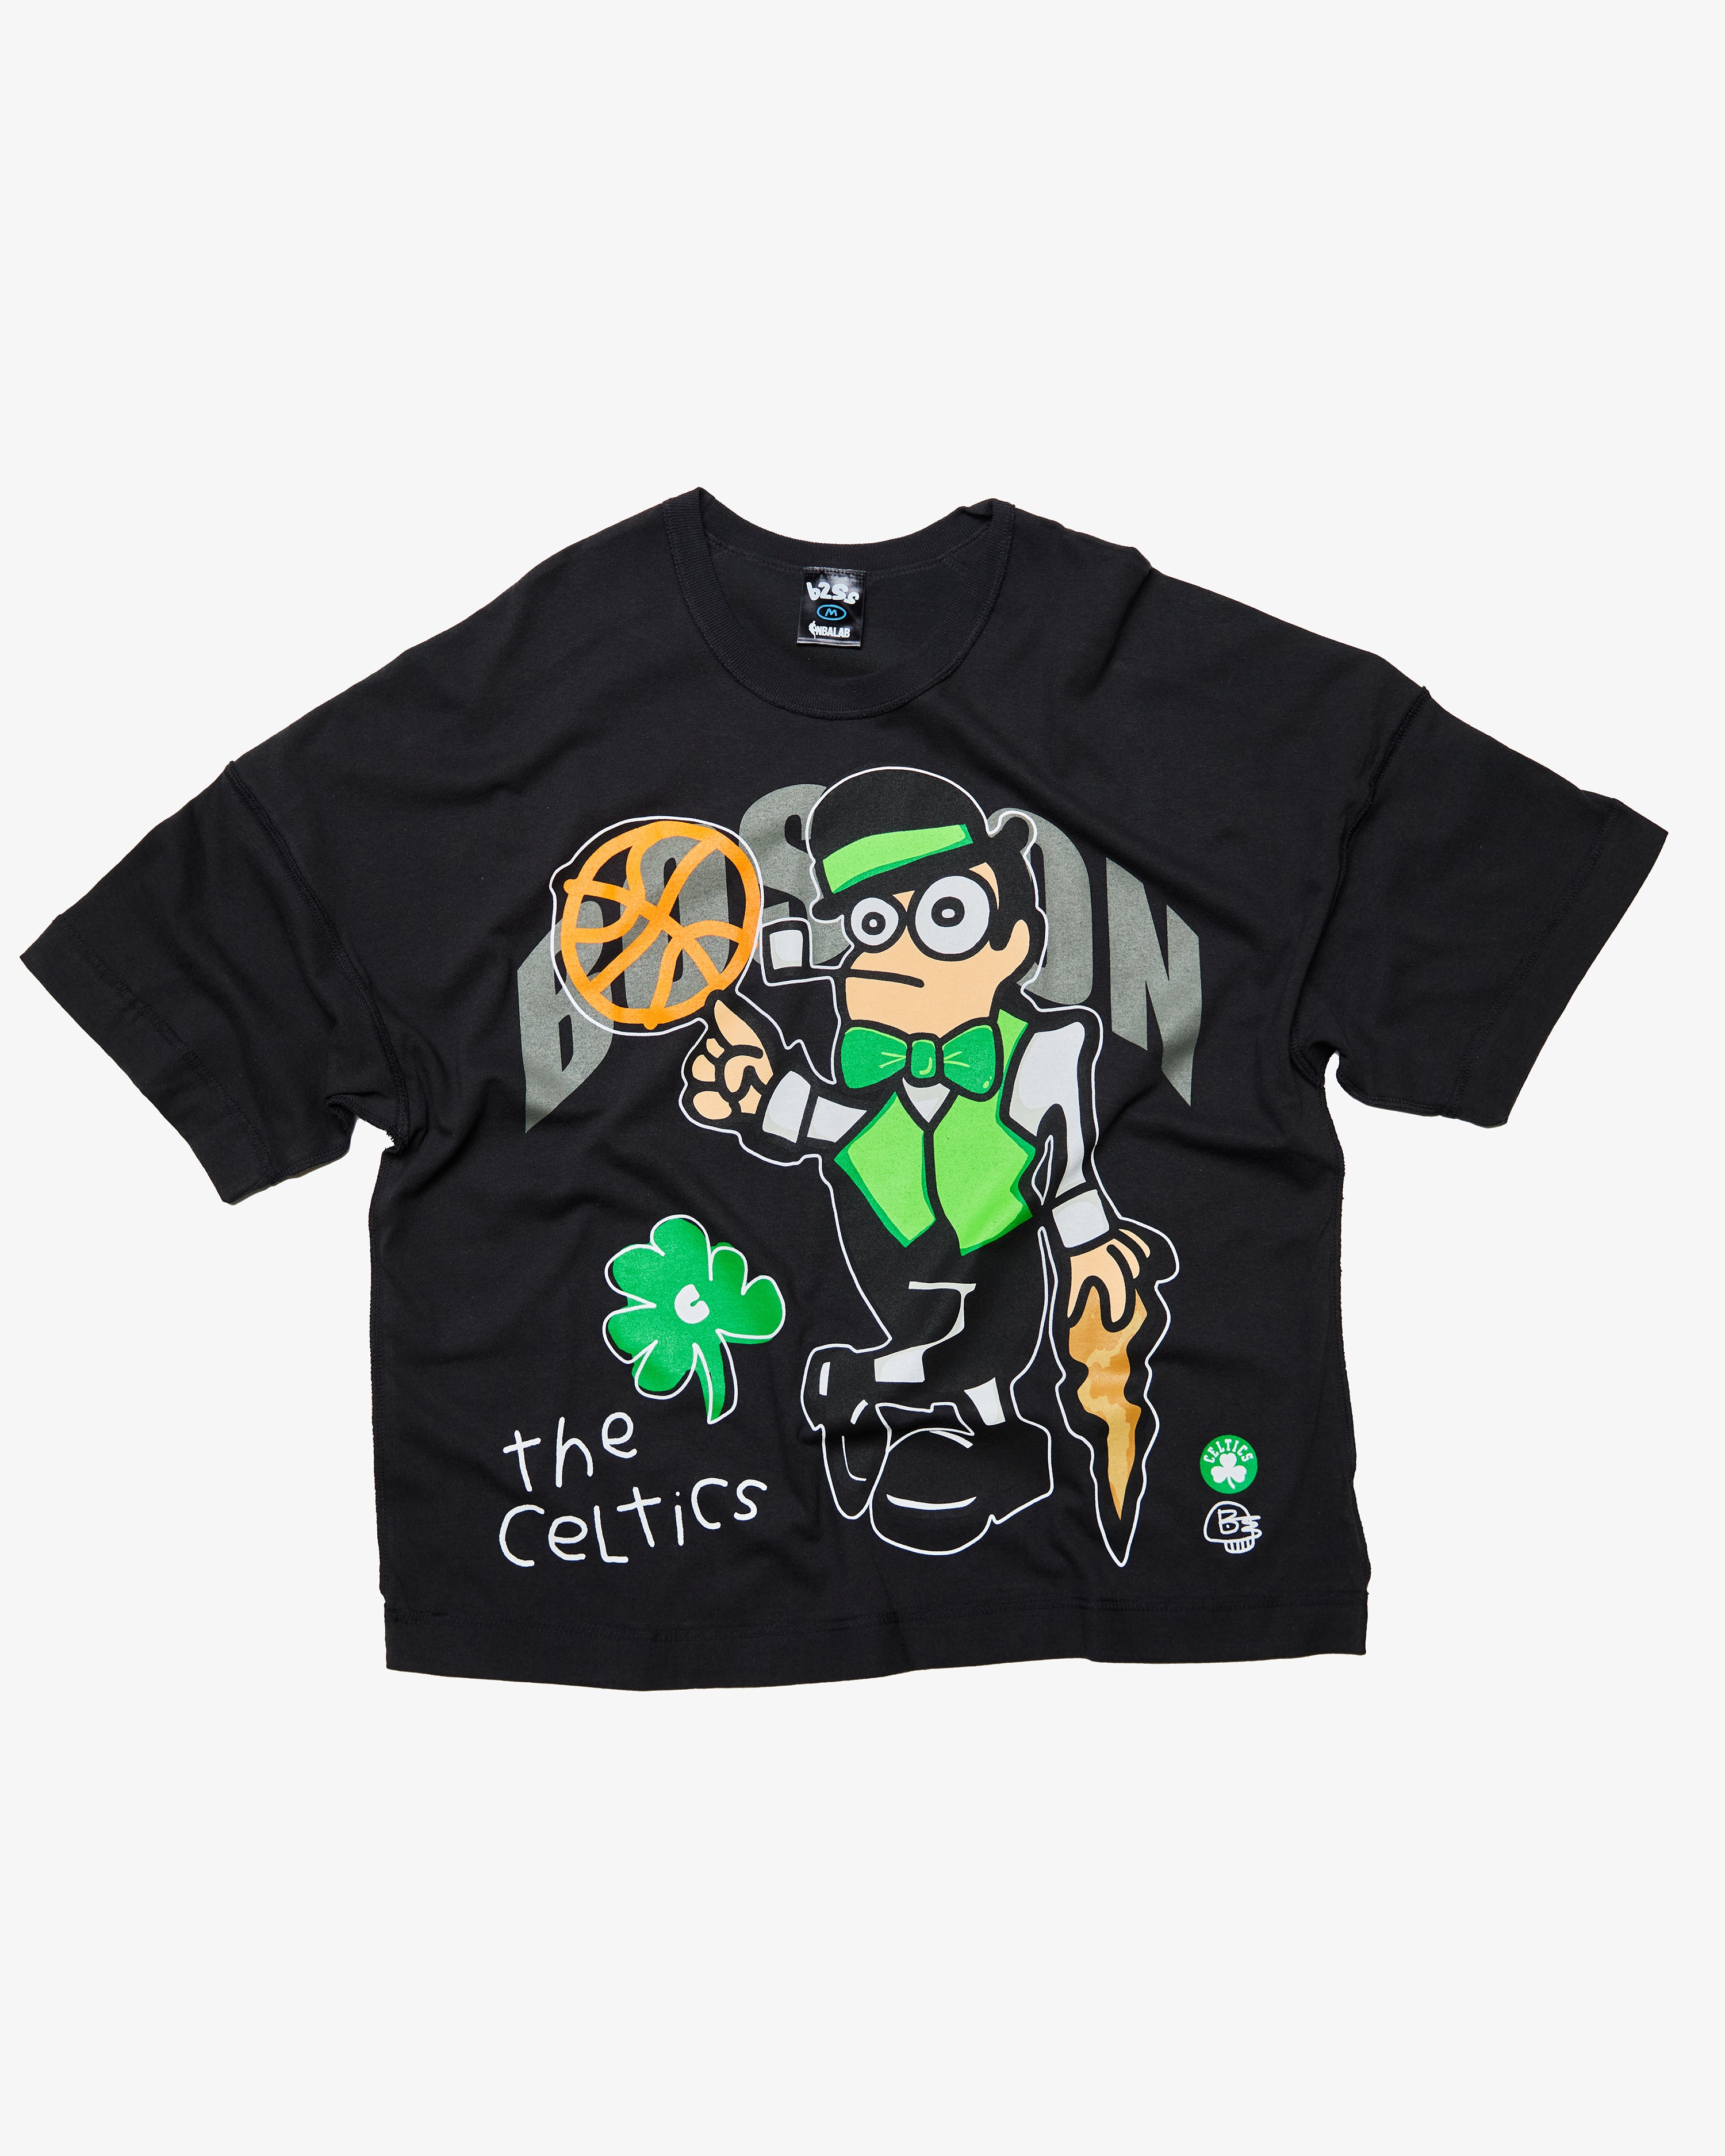 Boston Celtics T-Shirts in Boston Celtics Team Shop